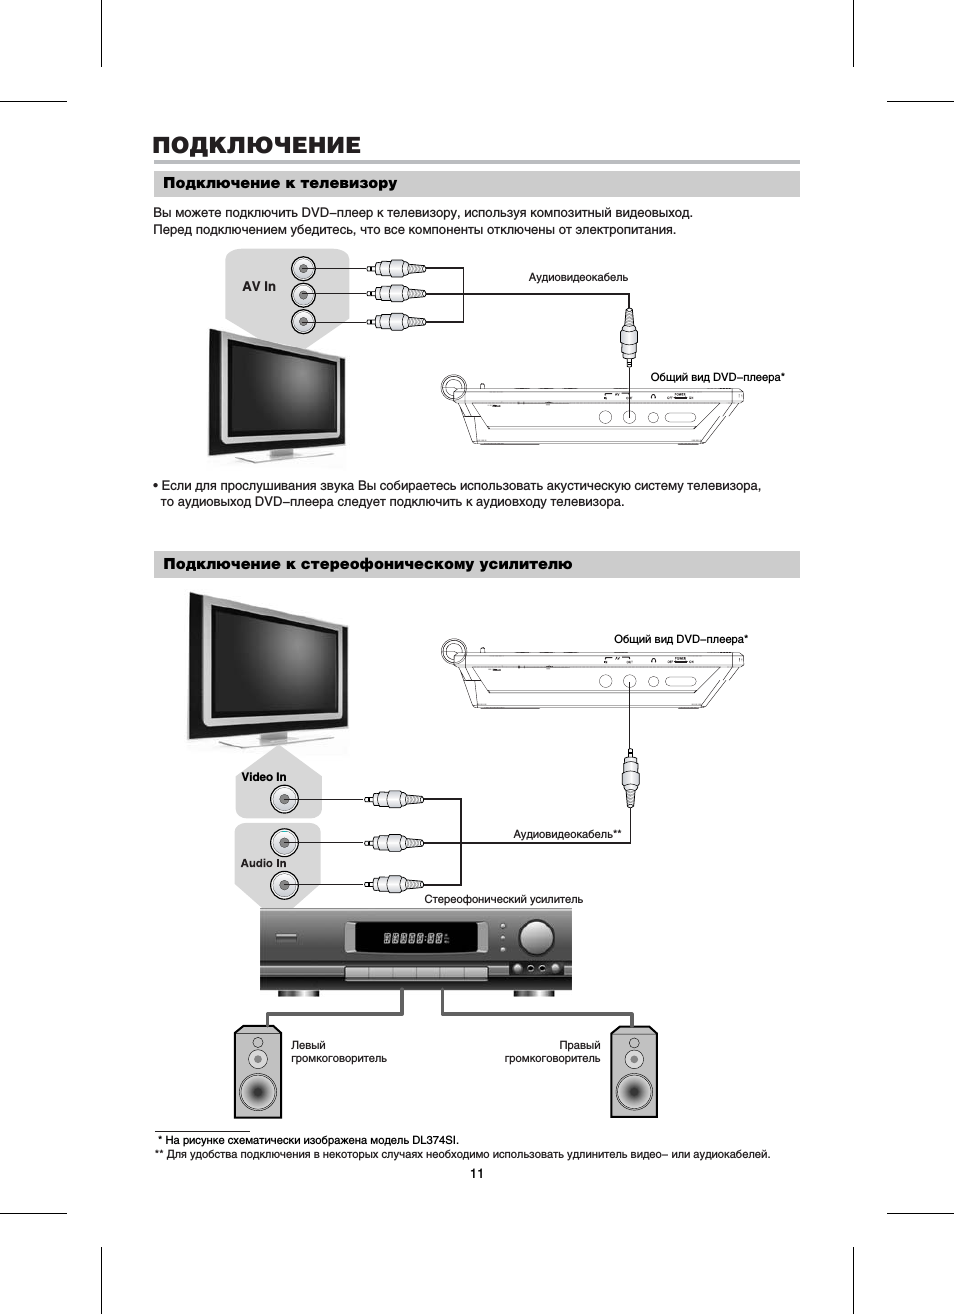 Как подключить караоке к телевизору samsung и lg smart tv